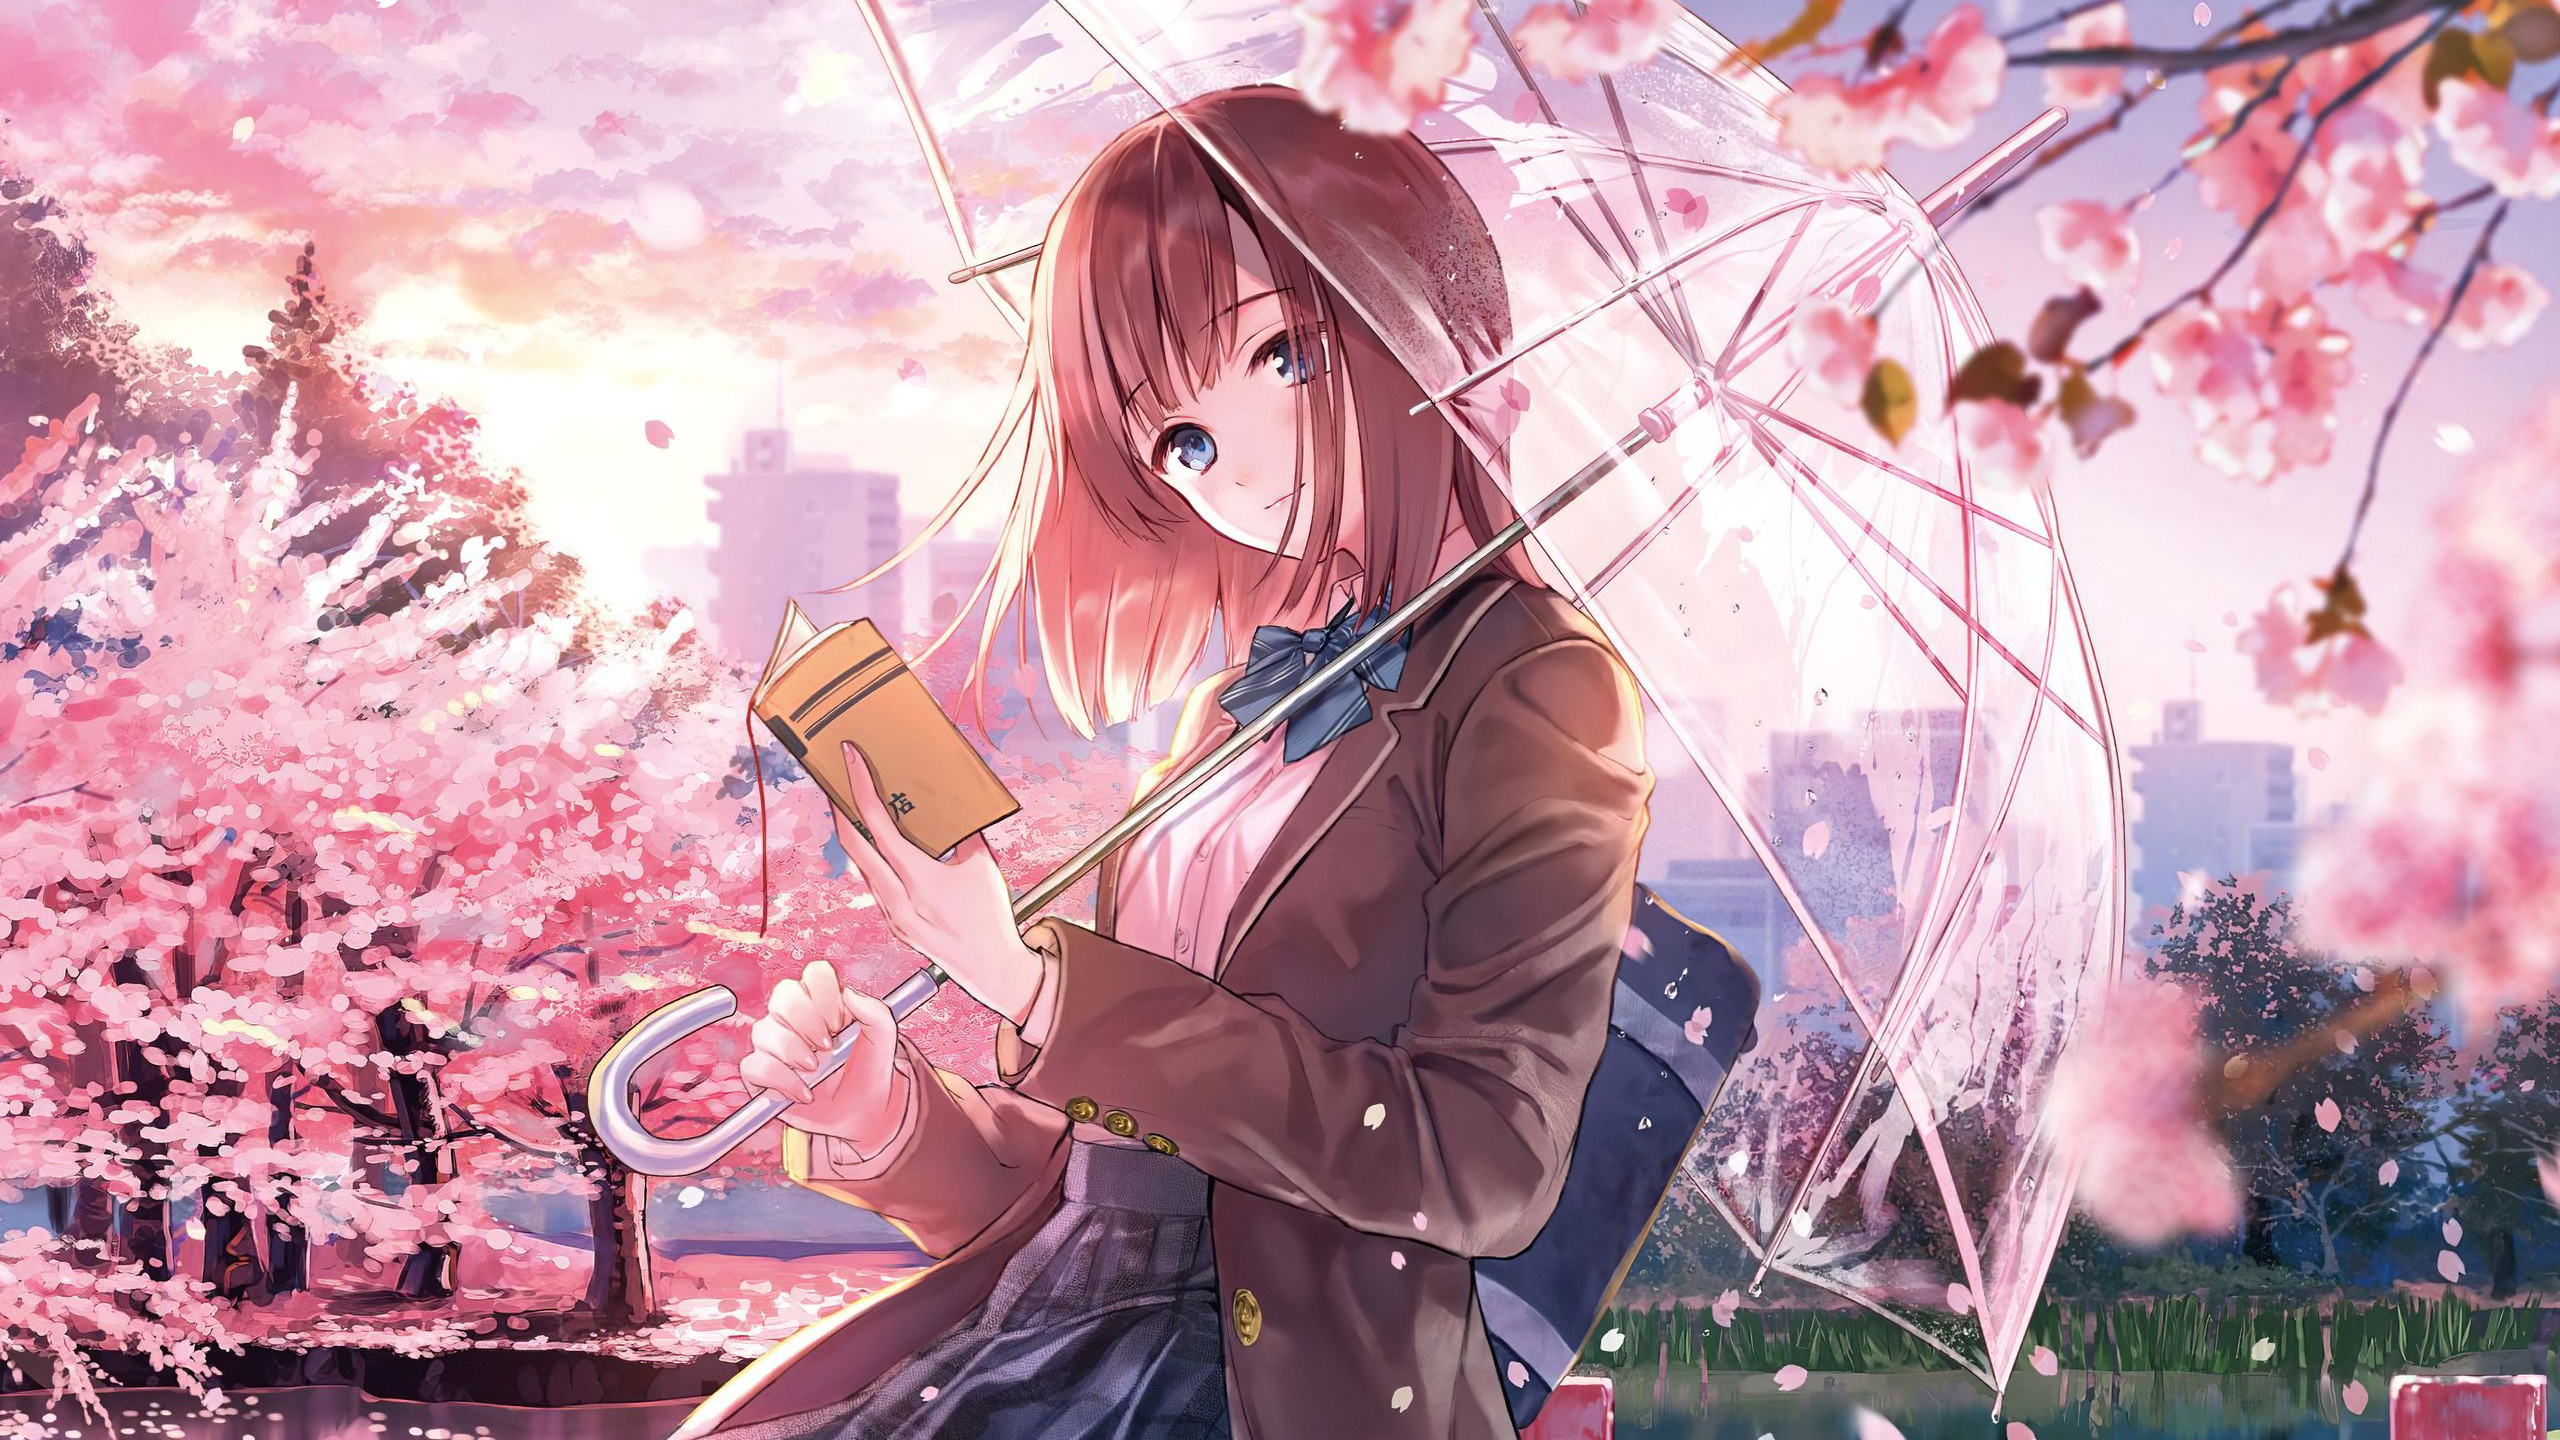 Anime Anime Girls Schoolgirl Umbrella Blue Eyes Book In Hand Sakura Tree Looking At Viewer Brunette  2560x1440